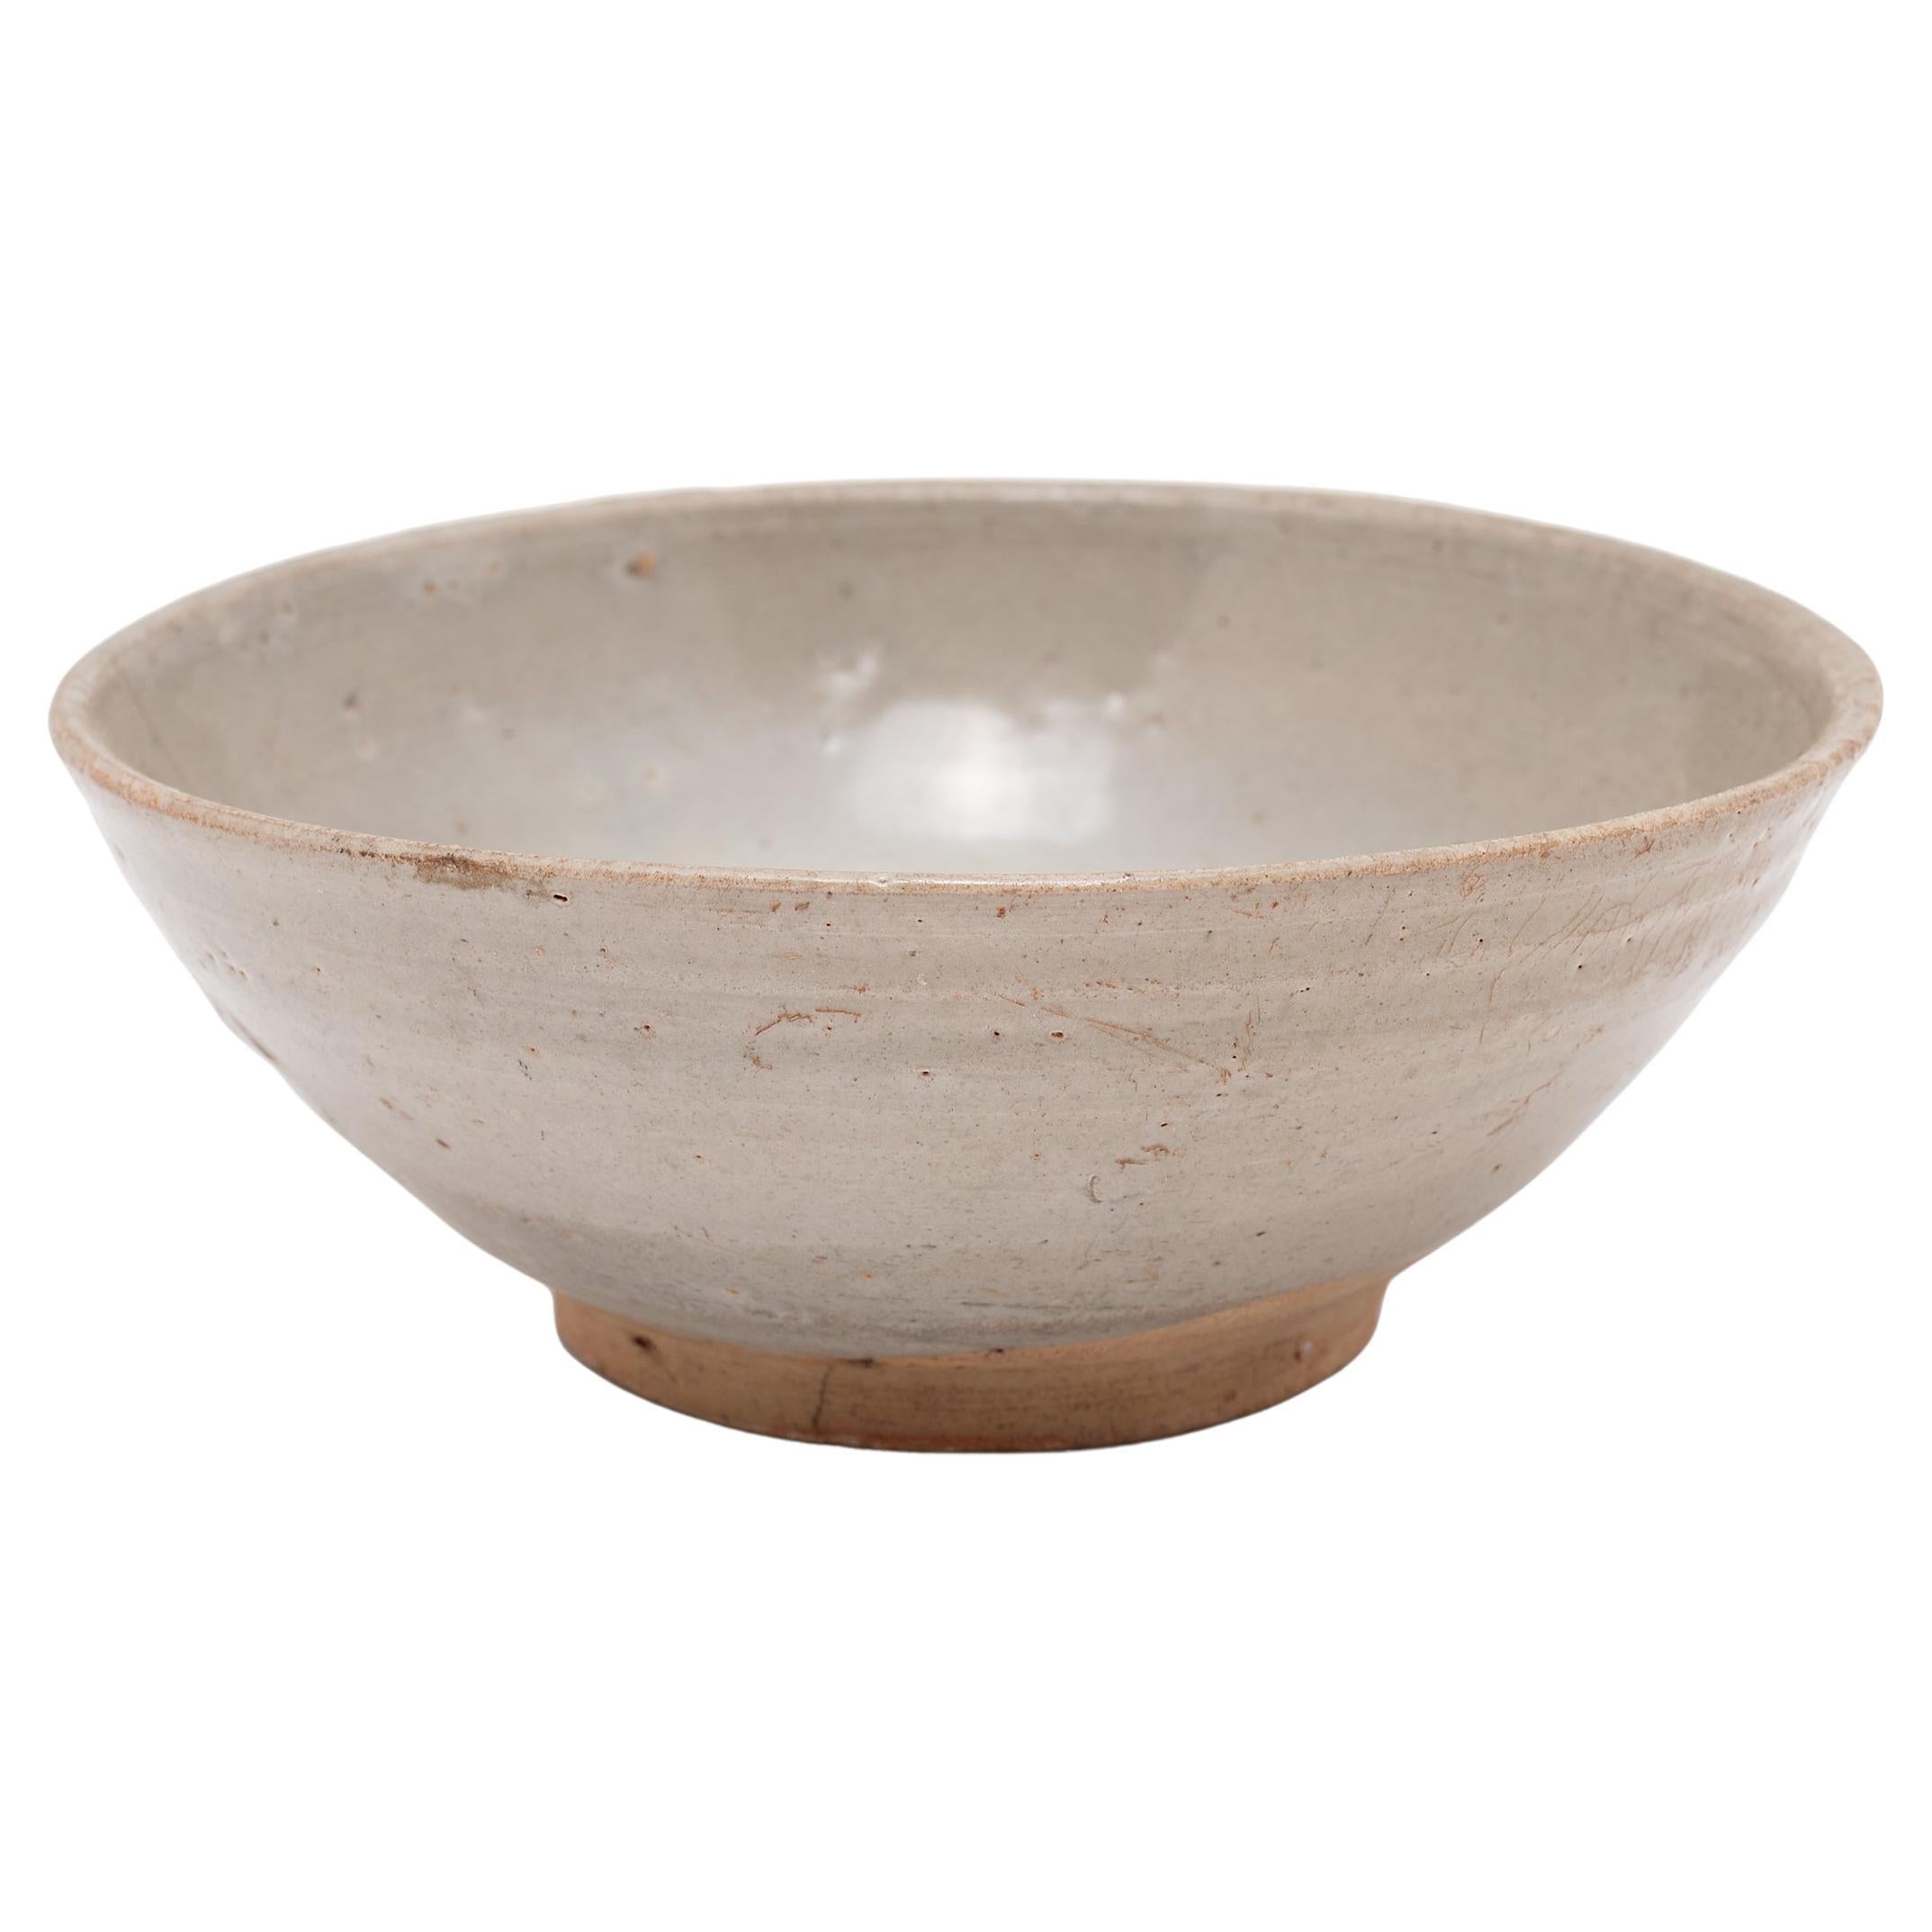 Provincial Chinese Grey Glazed Bowl, c. 1850